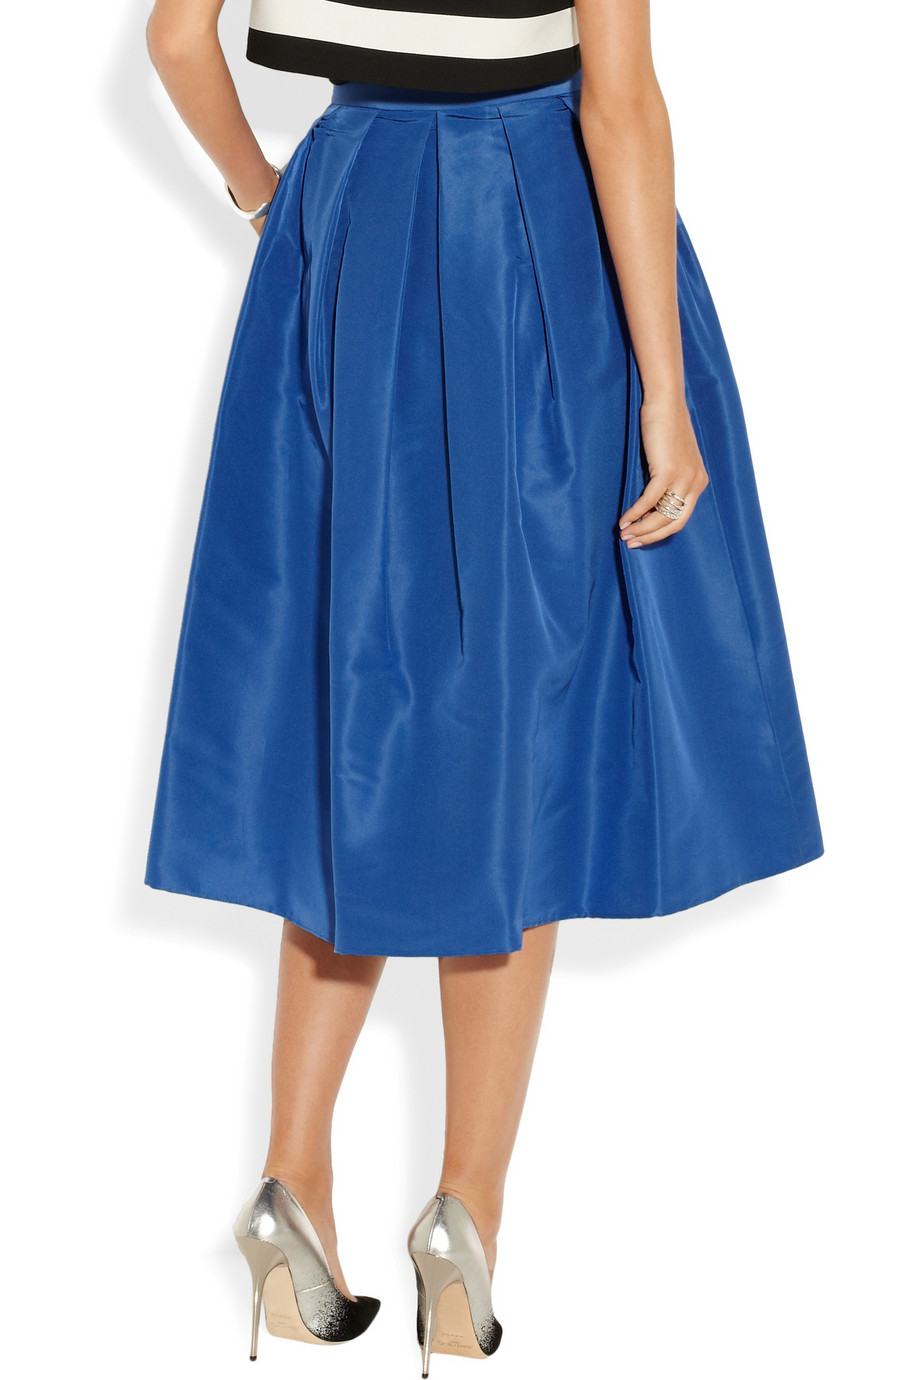 Tibi Silk Faille Midi Skirt in Blue - Lyst